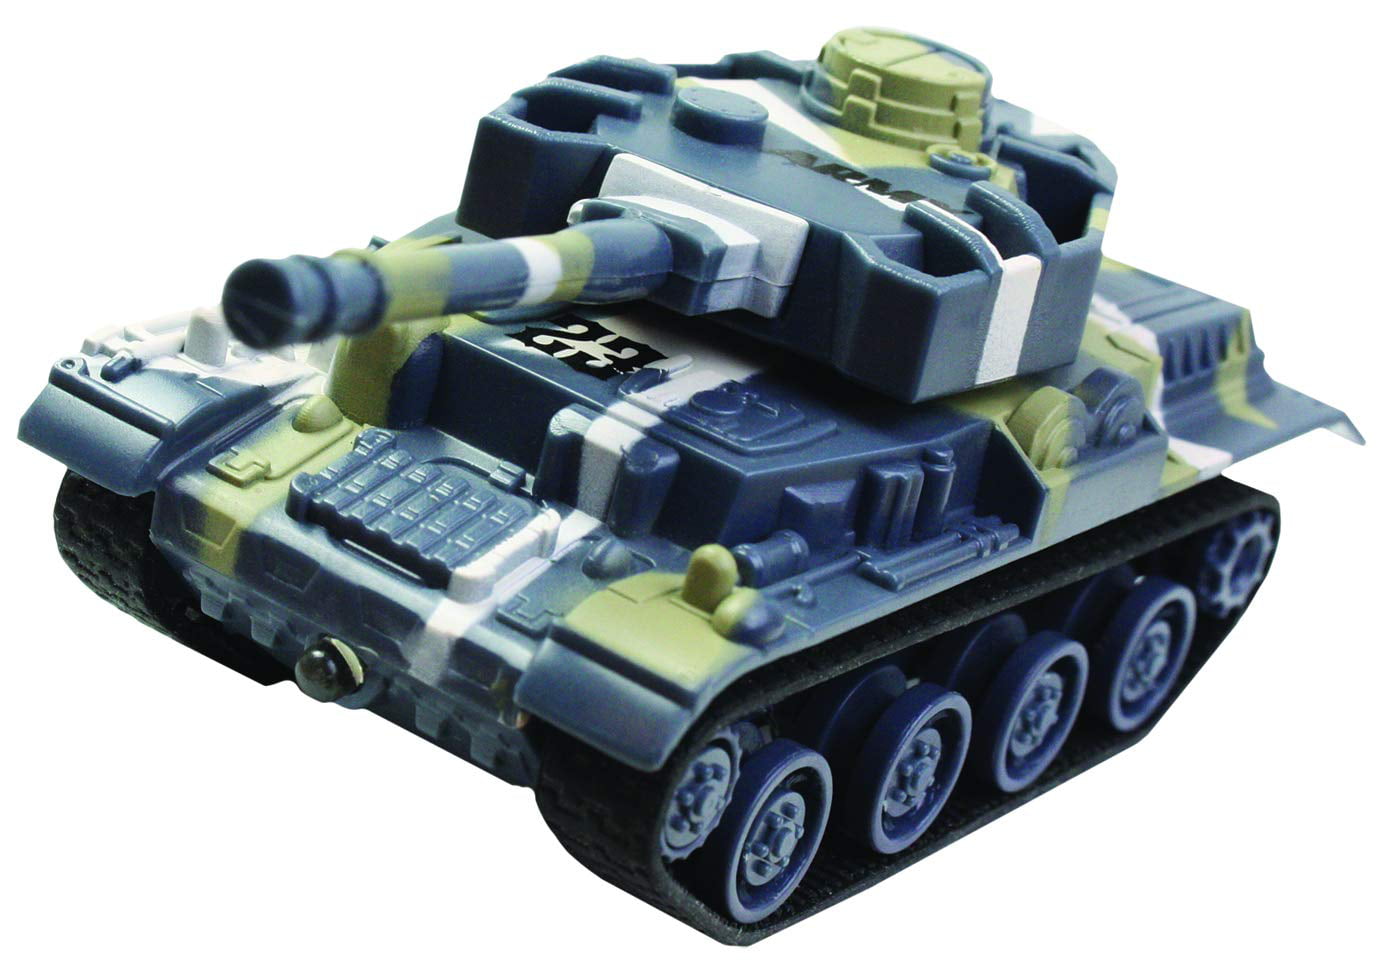 toy army tanks at walmart